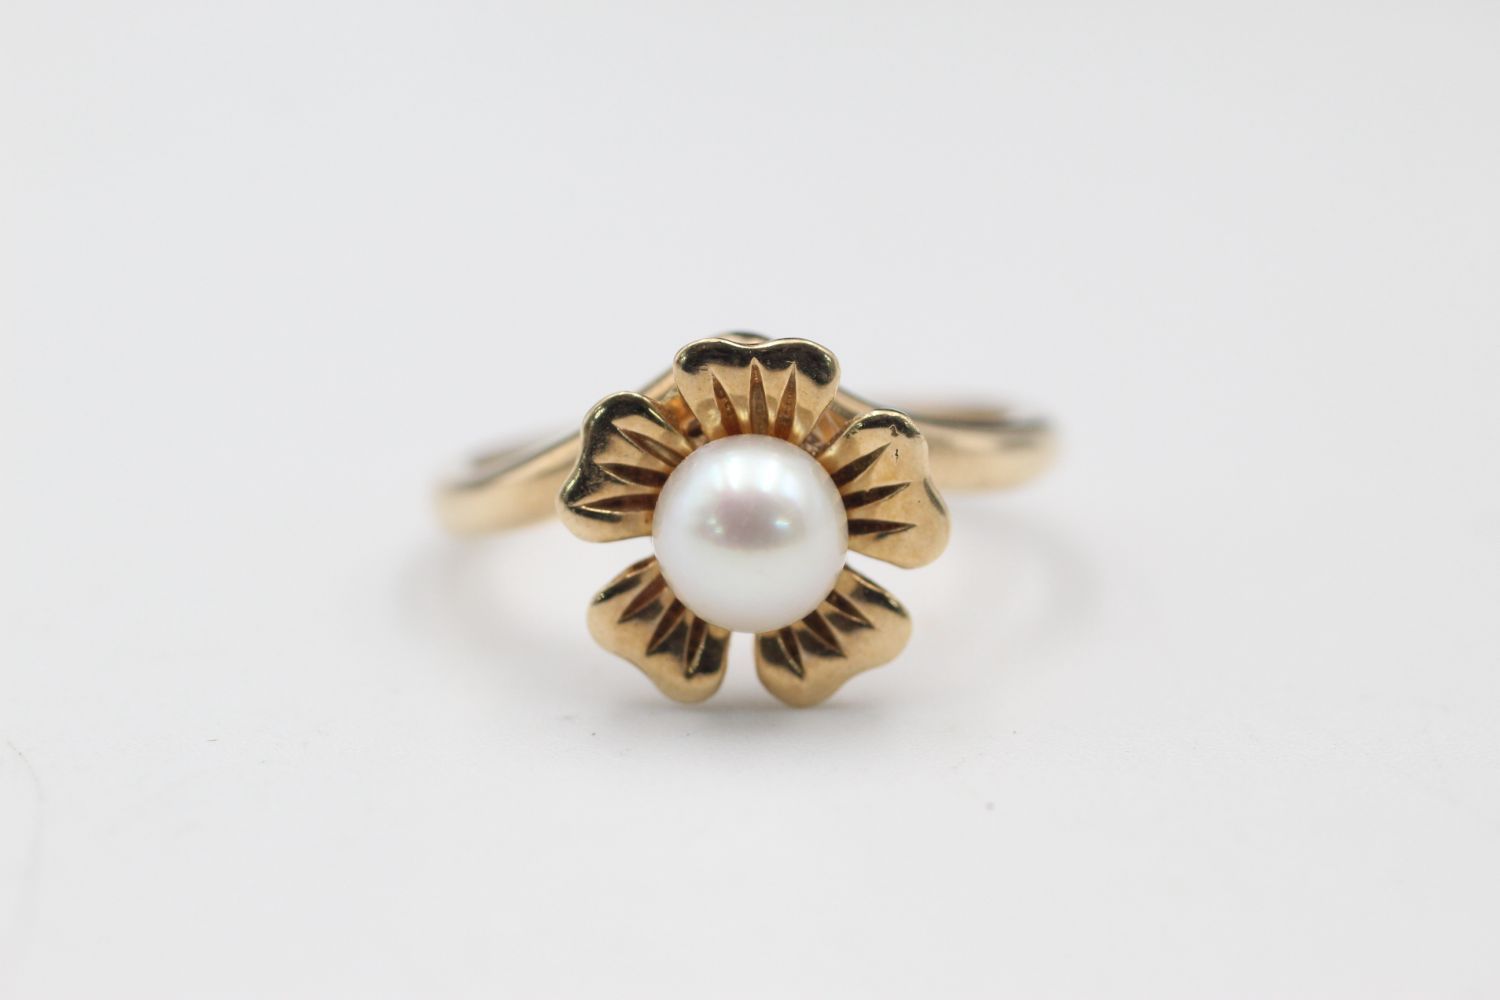 9ct gold pearl flower ring 3.4 grams gross